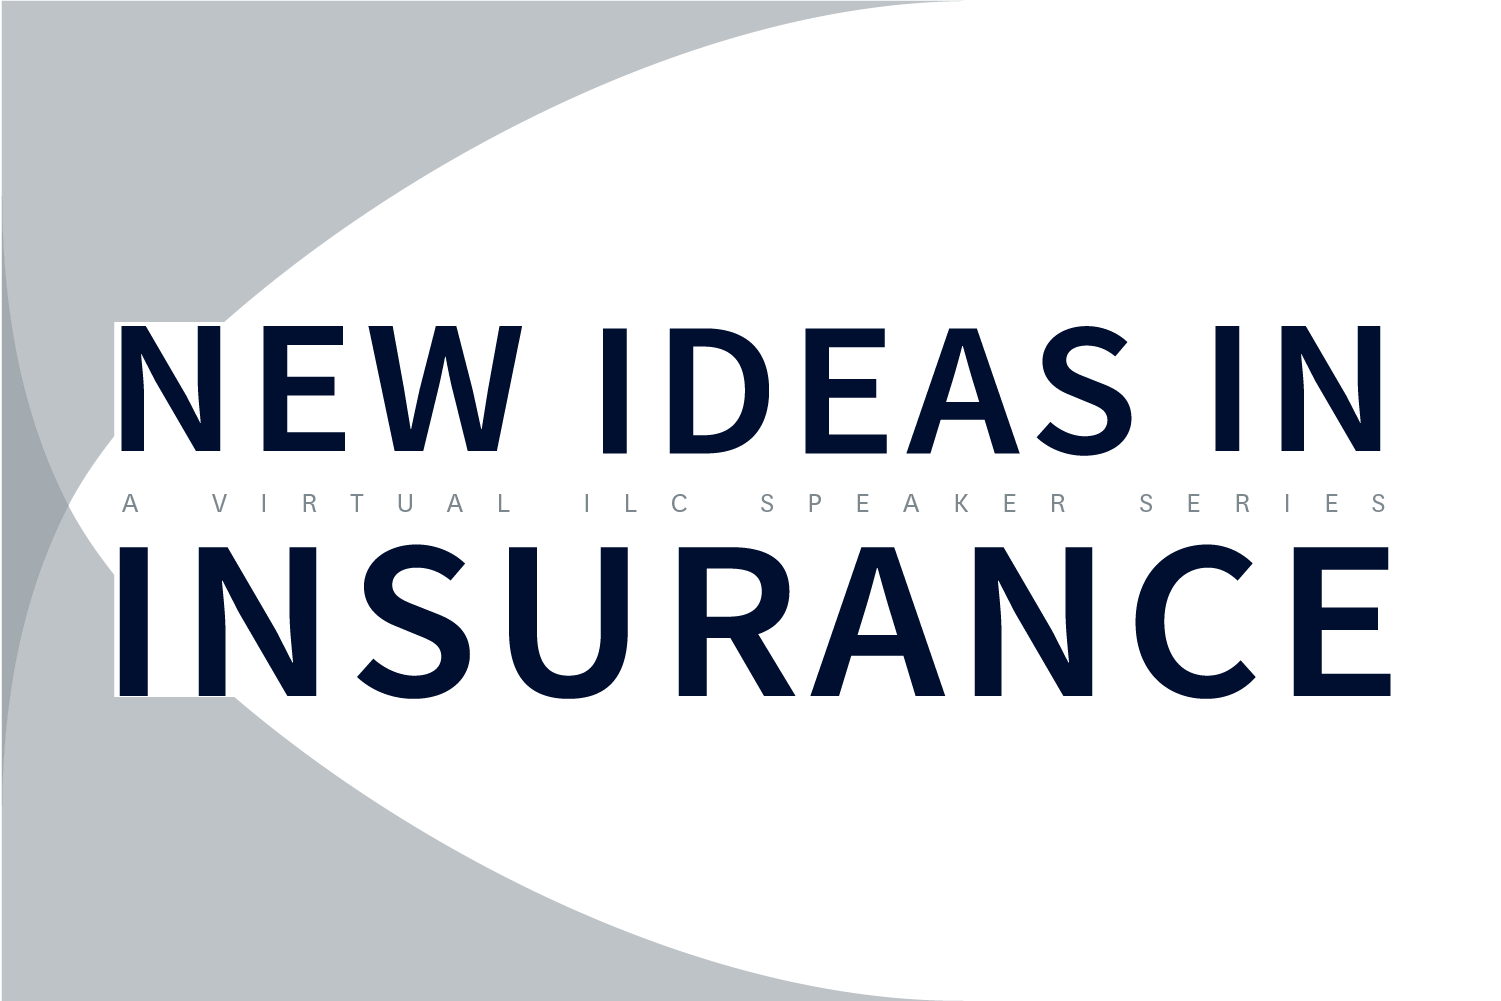 New Ideas in Insurance: A Virtual ILC Speaker Series